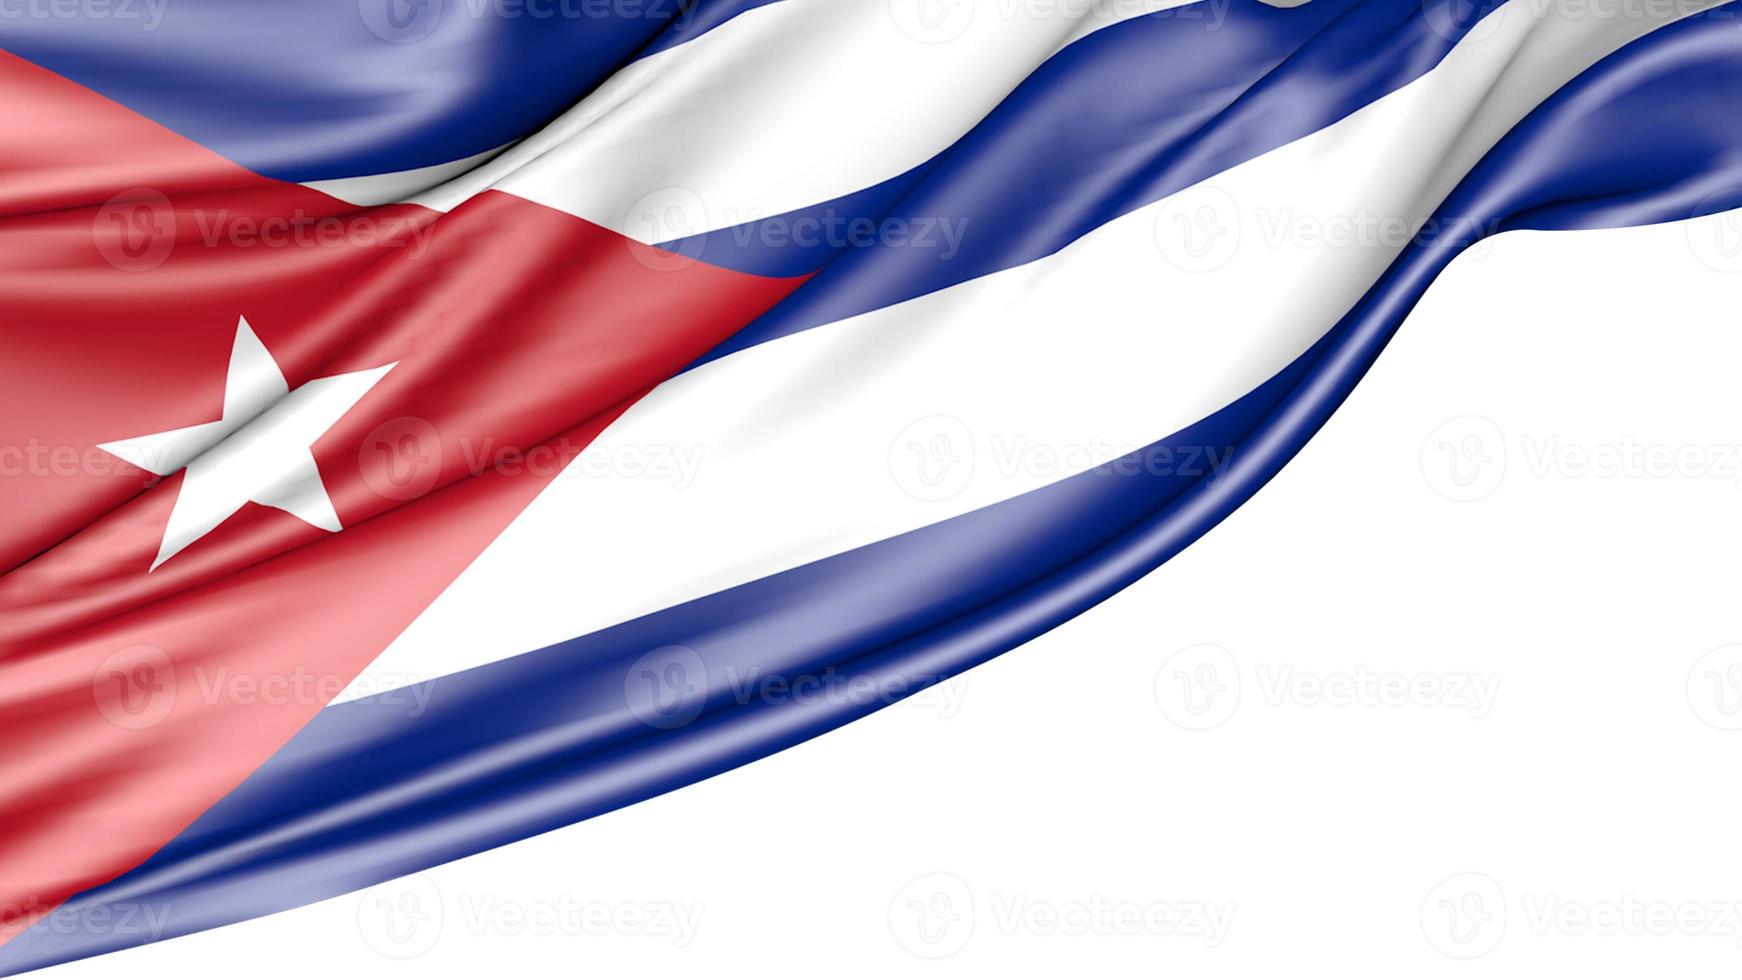 Cuba Flag Isolated on White Background, 3D Illustration photo